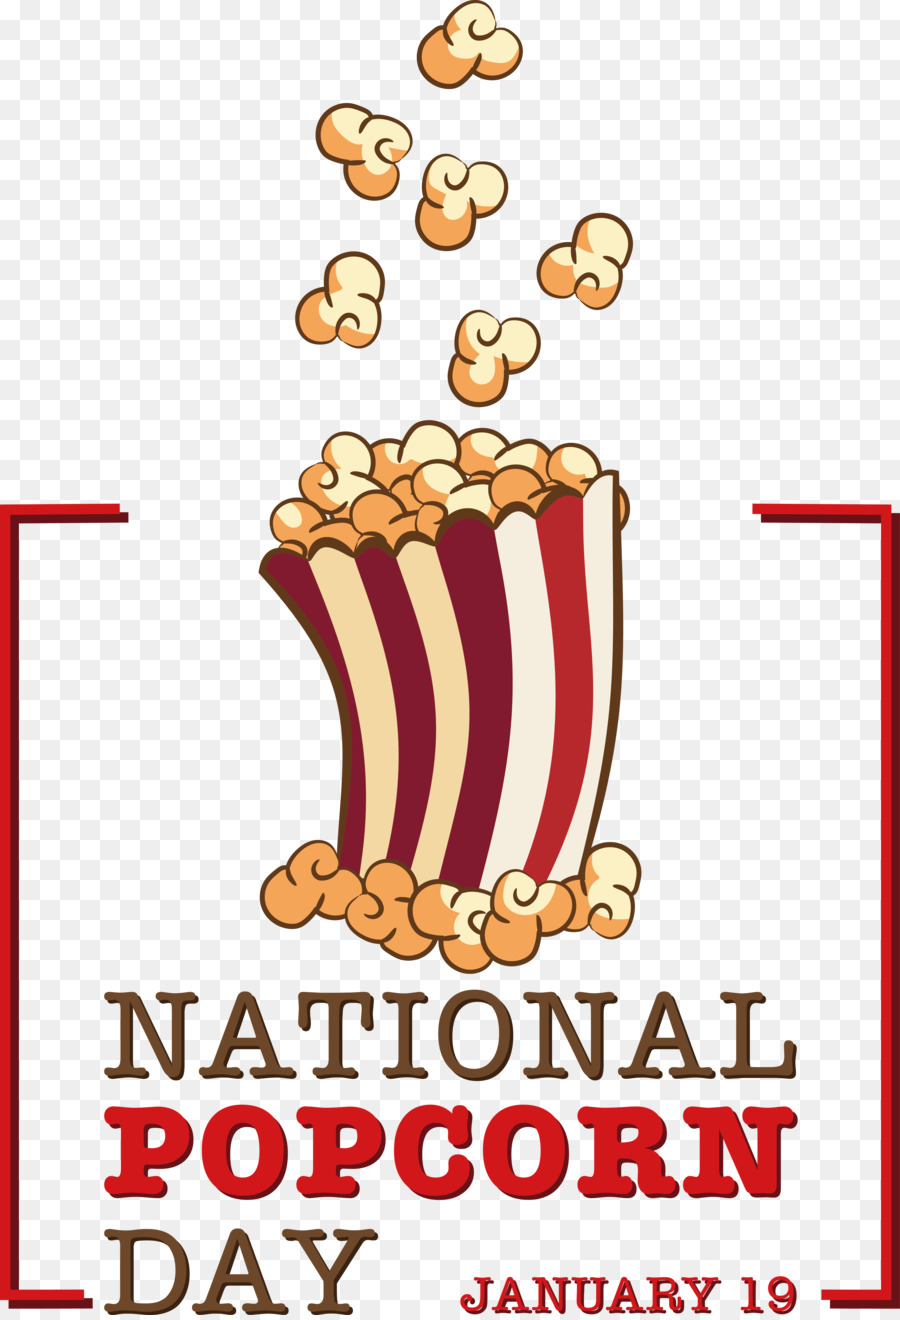 nationale popcorn Tag - 